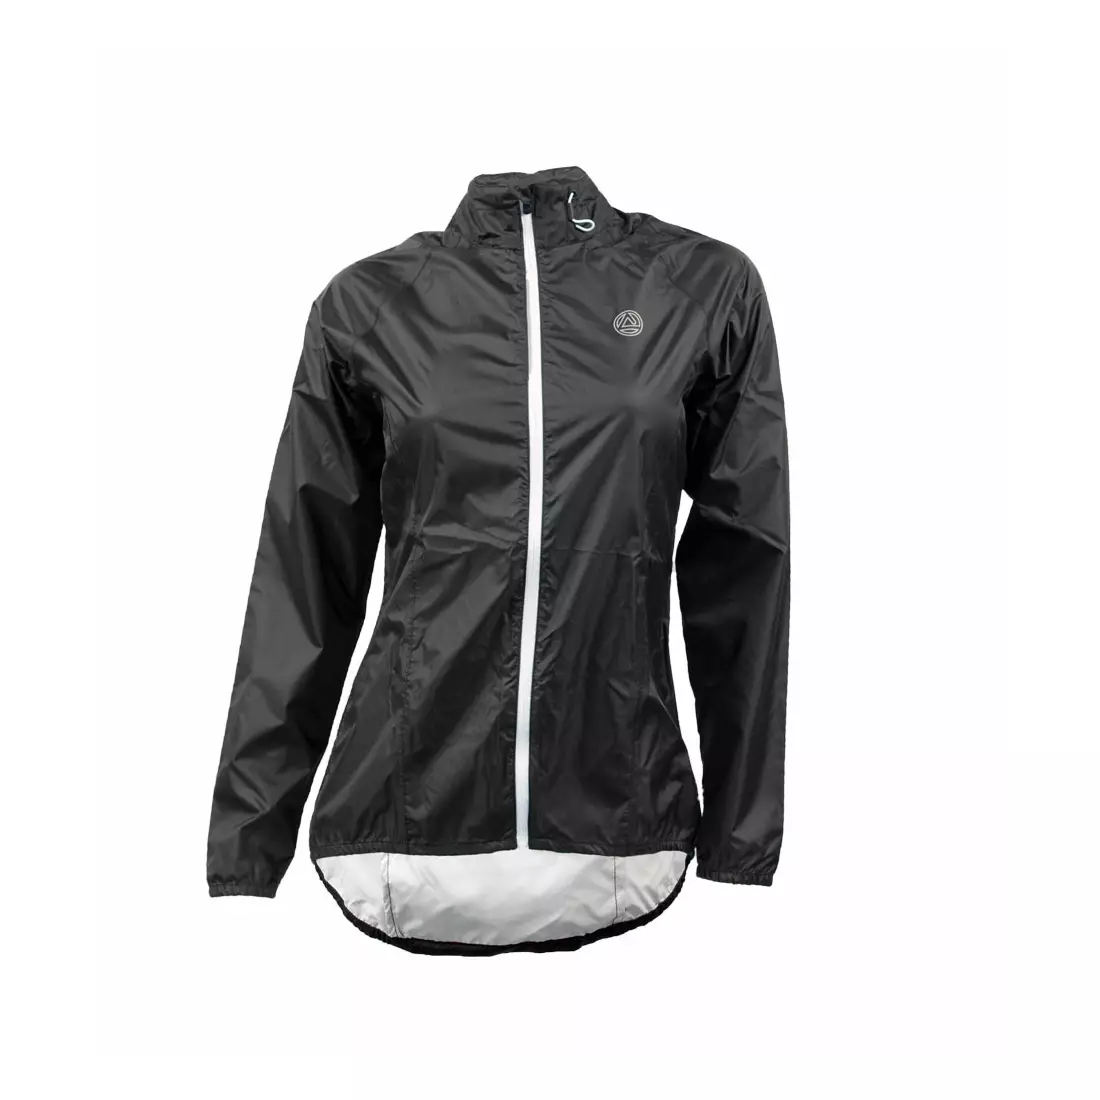 DARE2B Evident dámská cyklistická bunda do deště DWW096-800, barva: černá